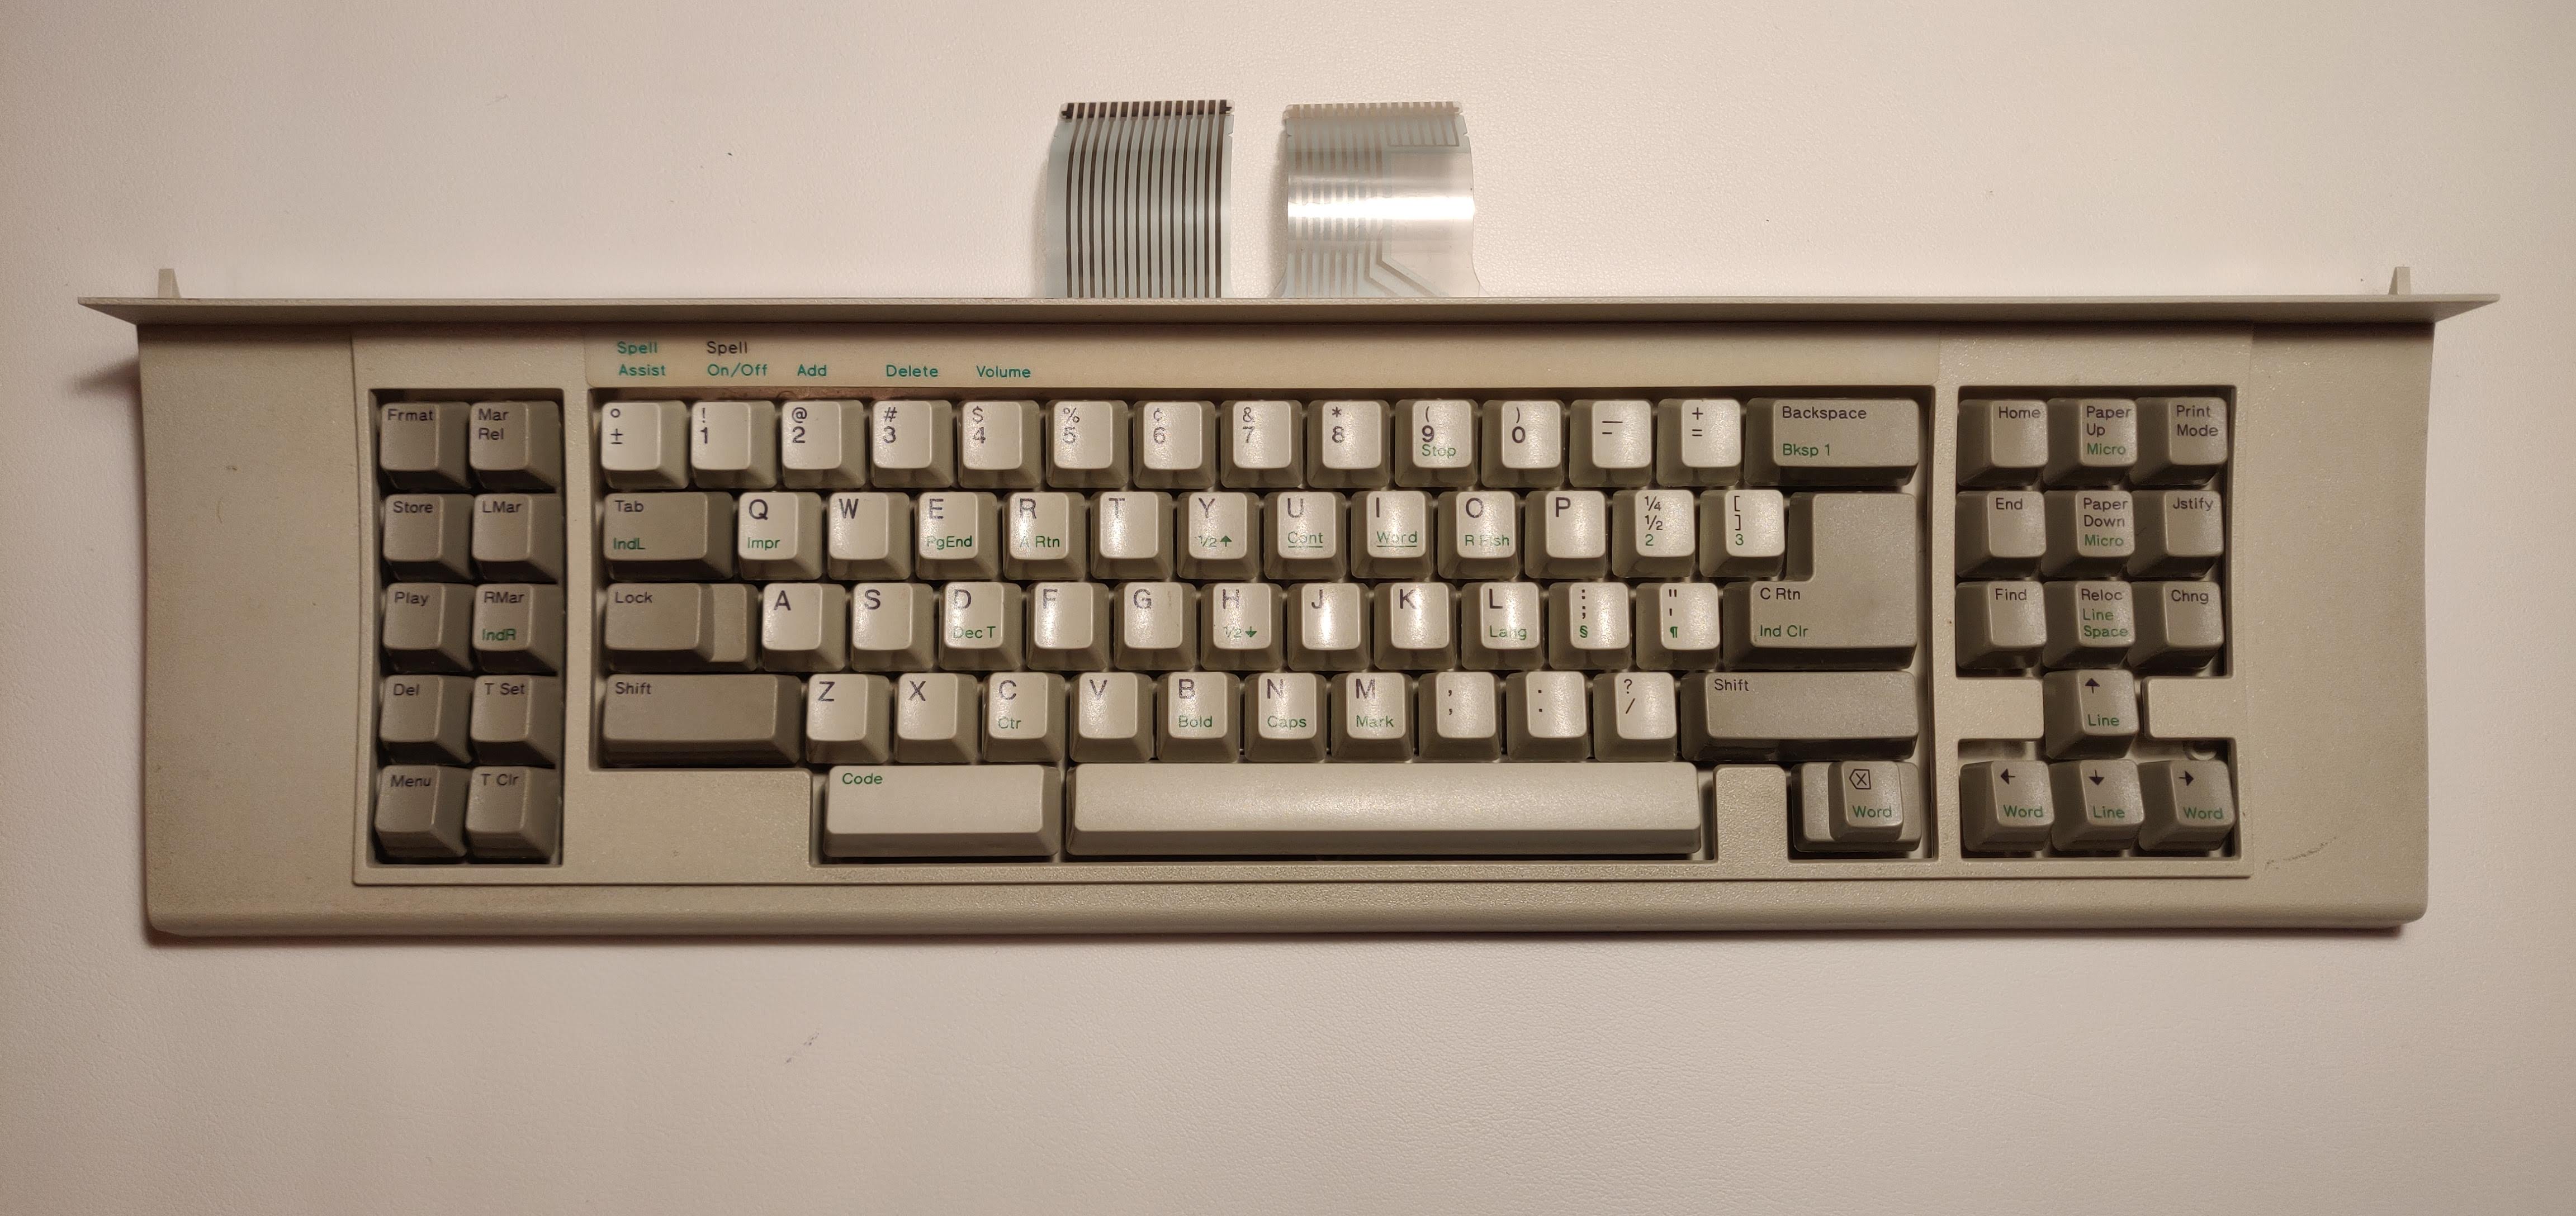 Keyboard front